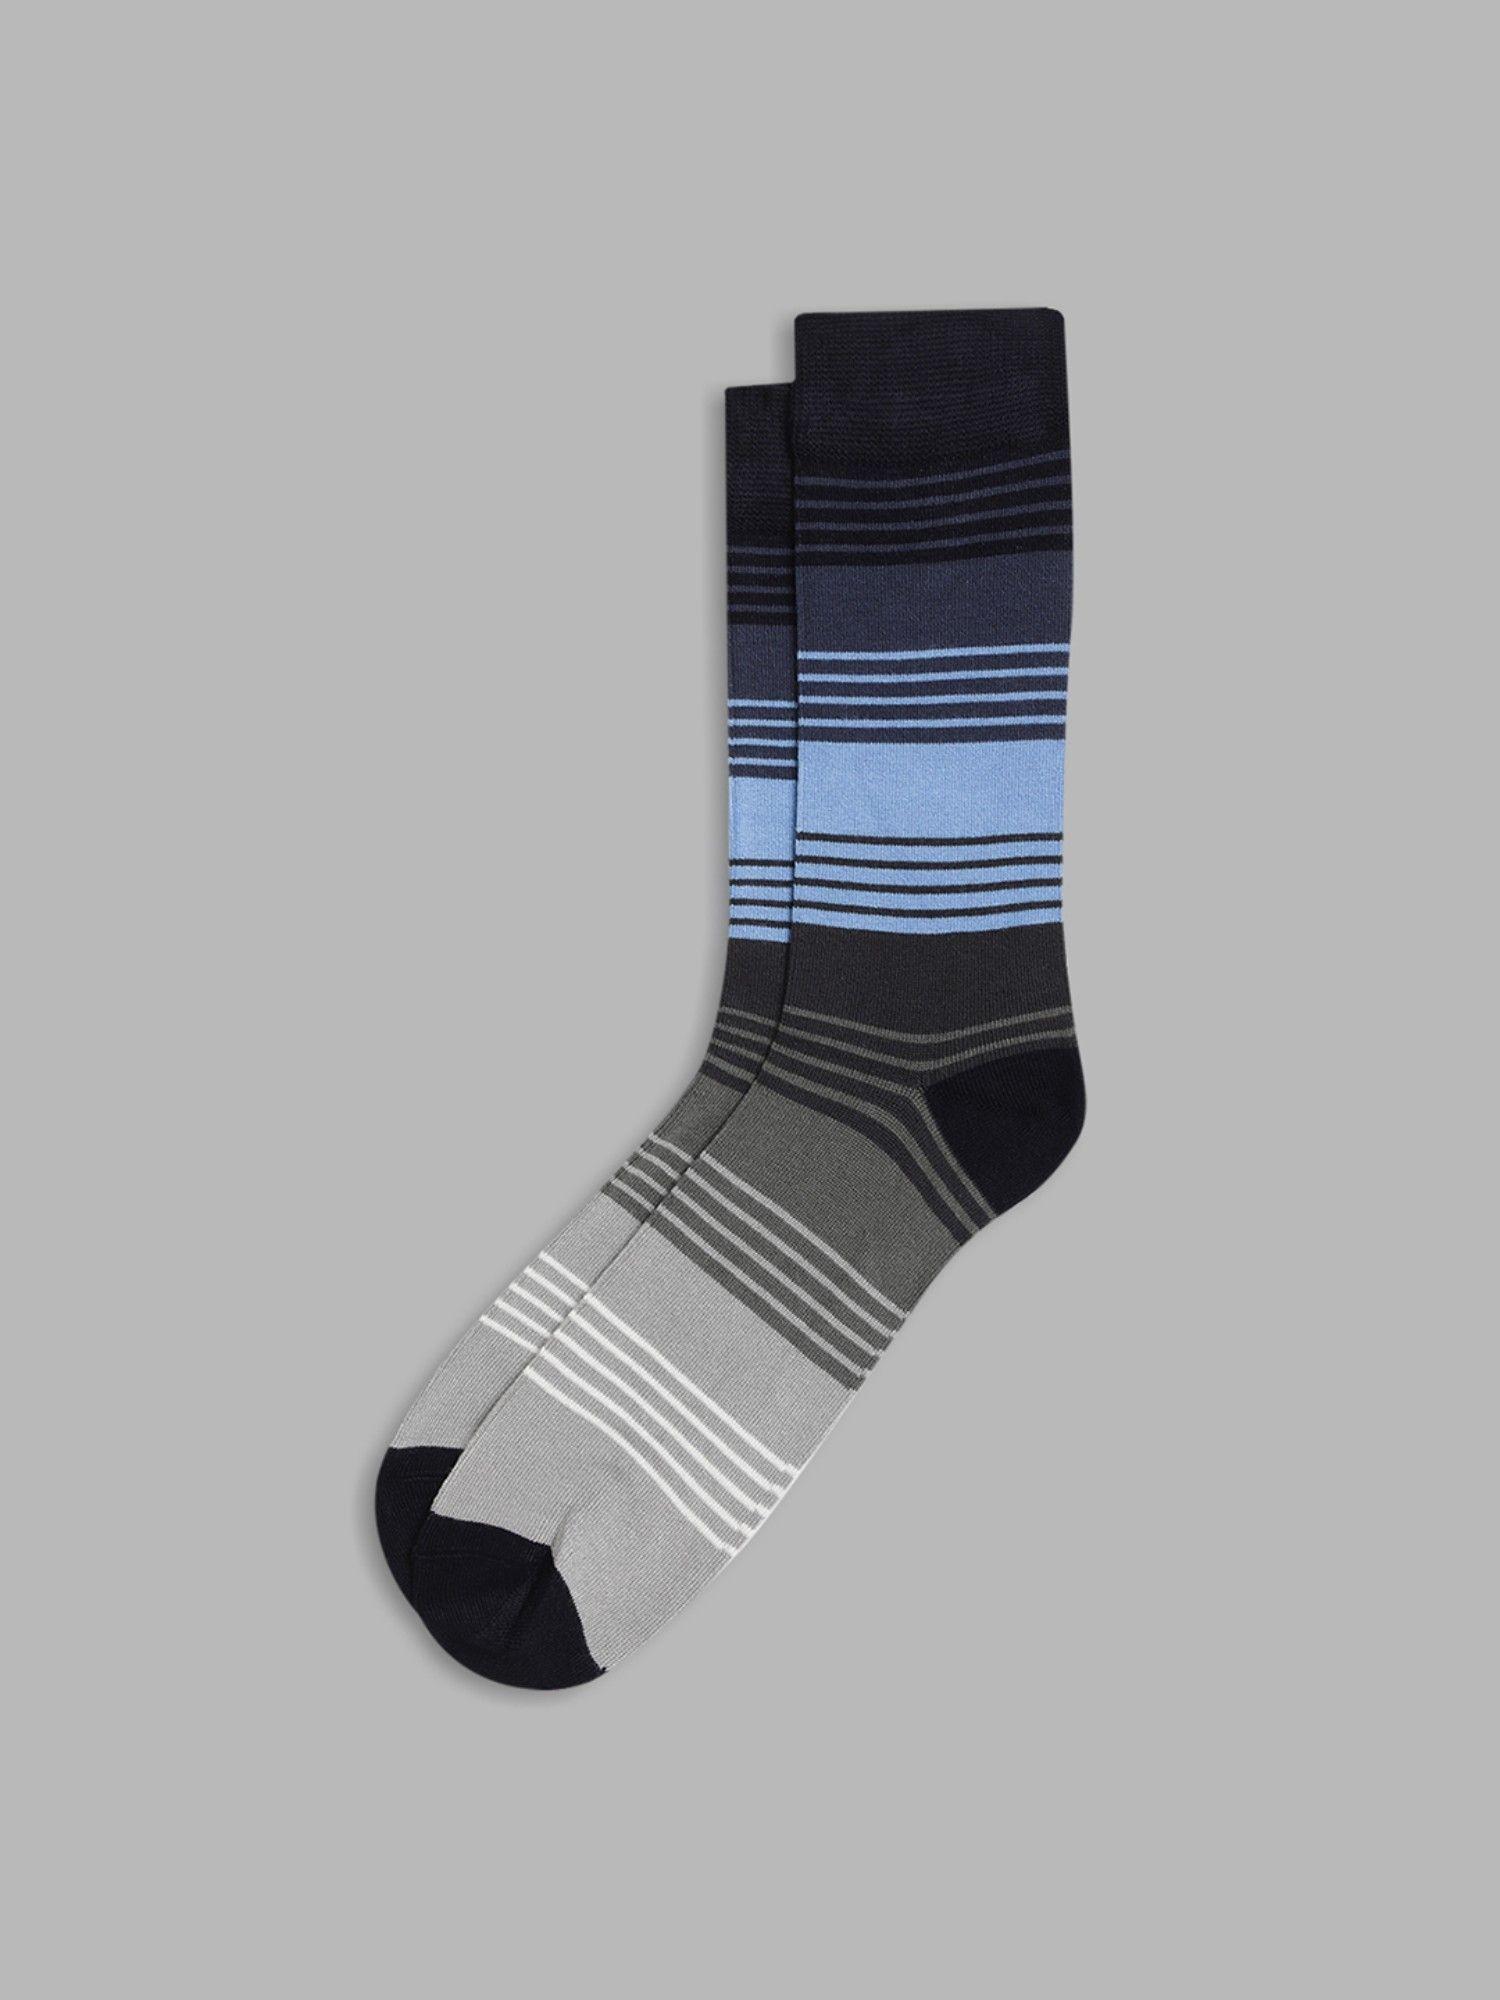 mens-blue-&-multi-color-stripes-socks